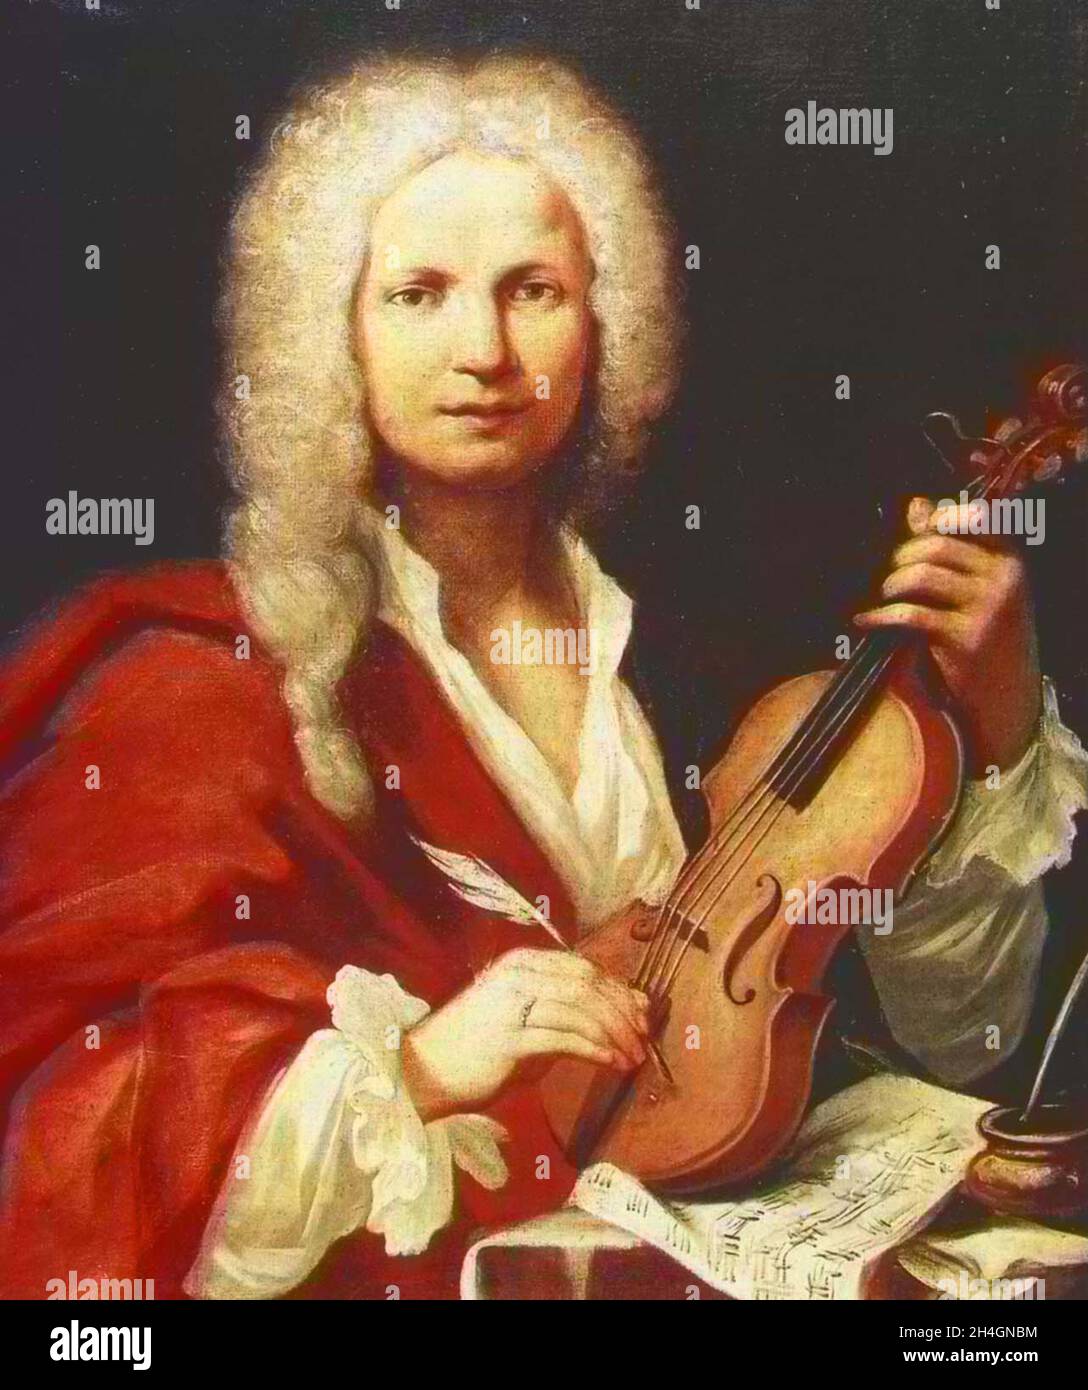 A portrait of  the Italian composer Antonio Vivaldi Stock Photo